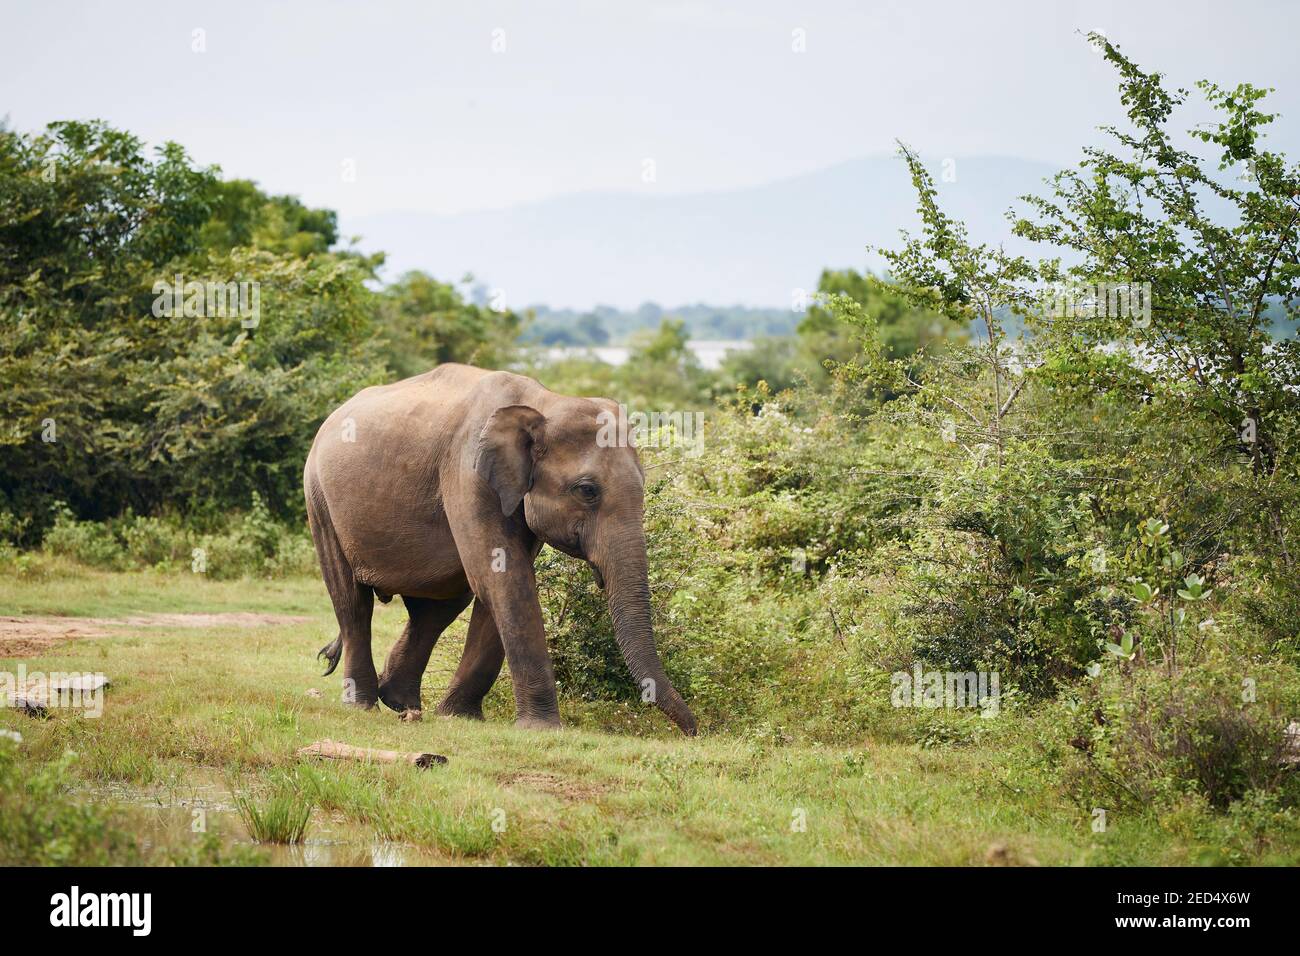 Elephant in the wild against green landscape. Wildlife animals in Sri Lanka. Stock Photo